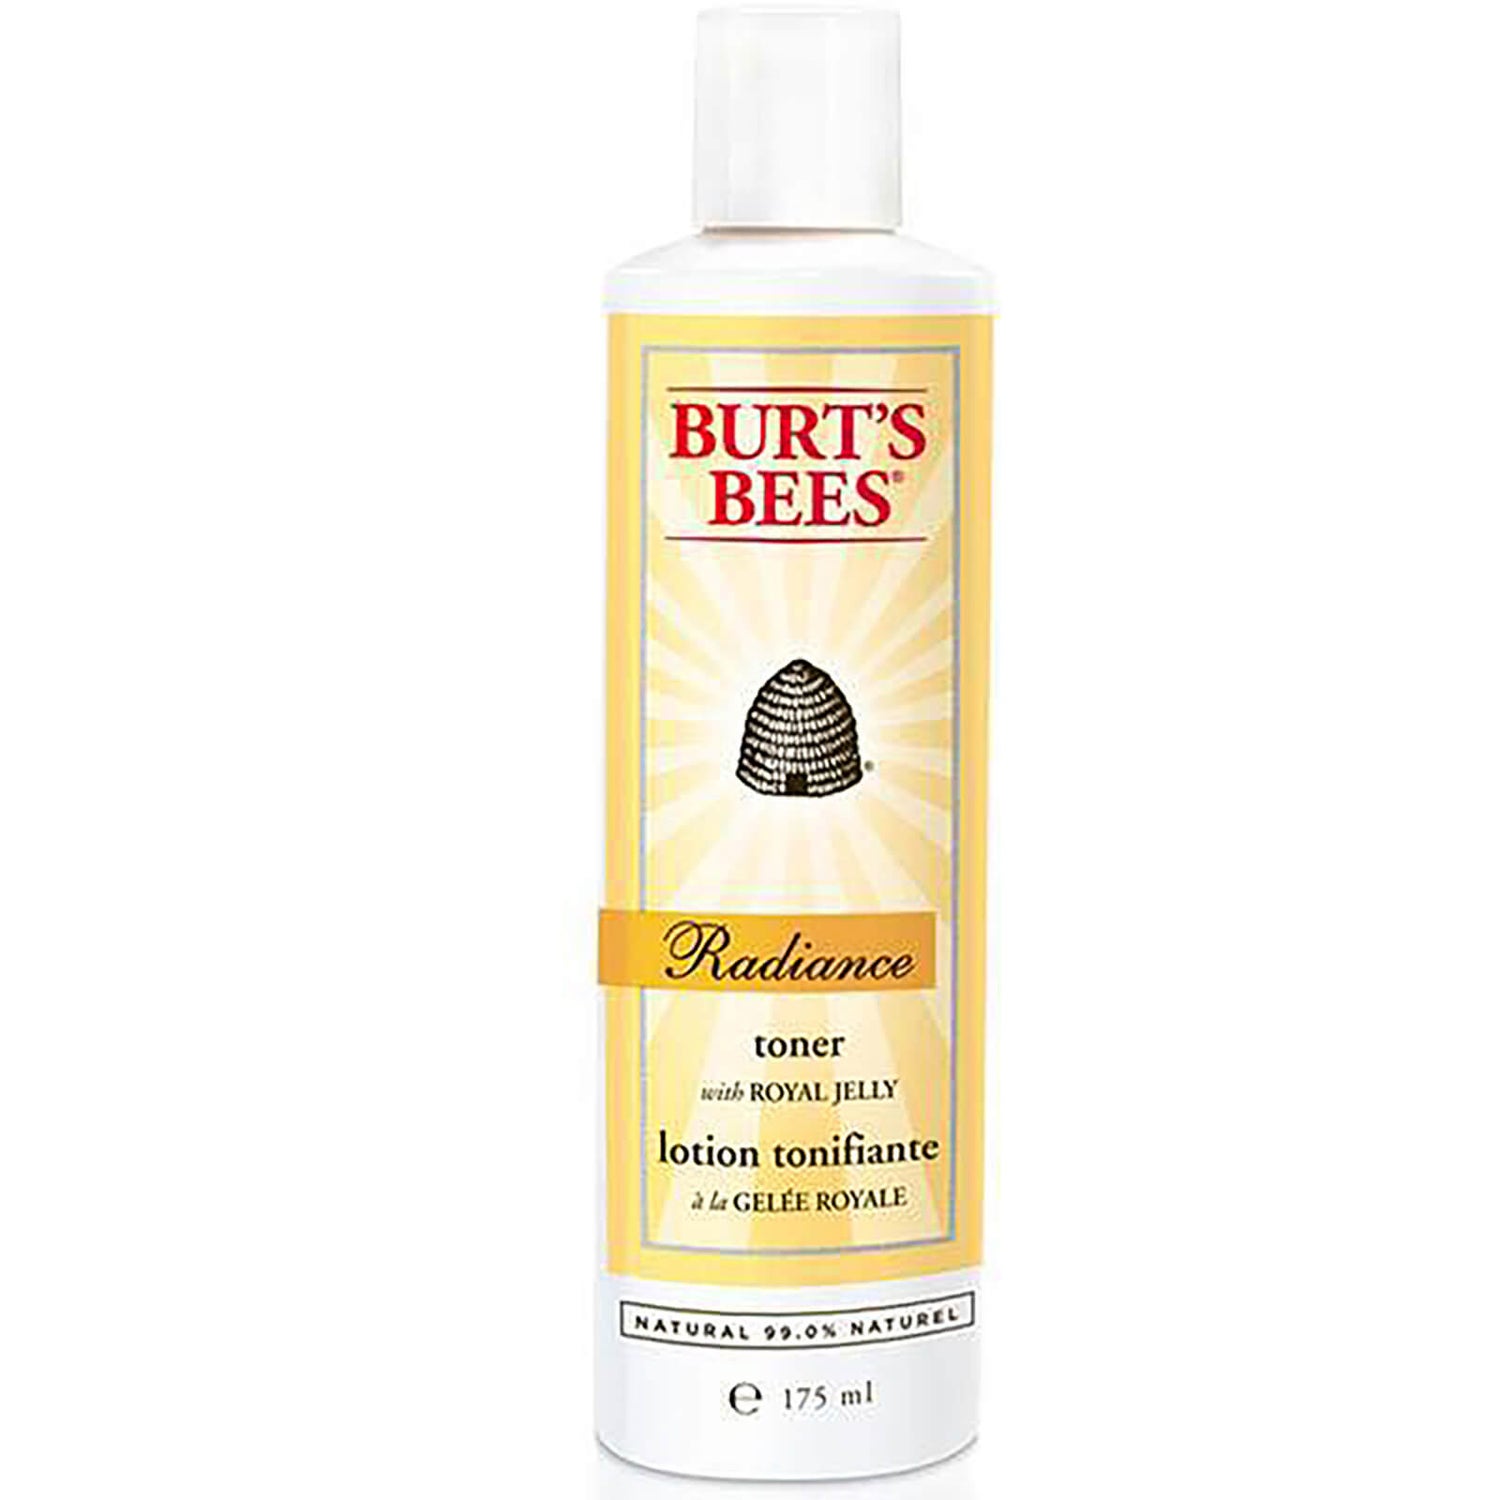 Burt's Bees Radiance Tonico 6fl oz